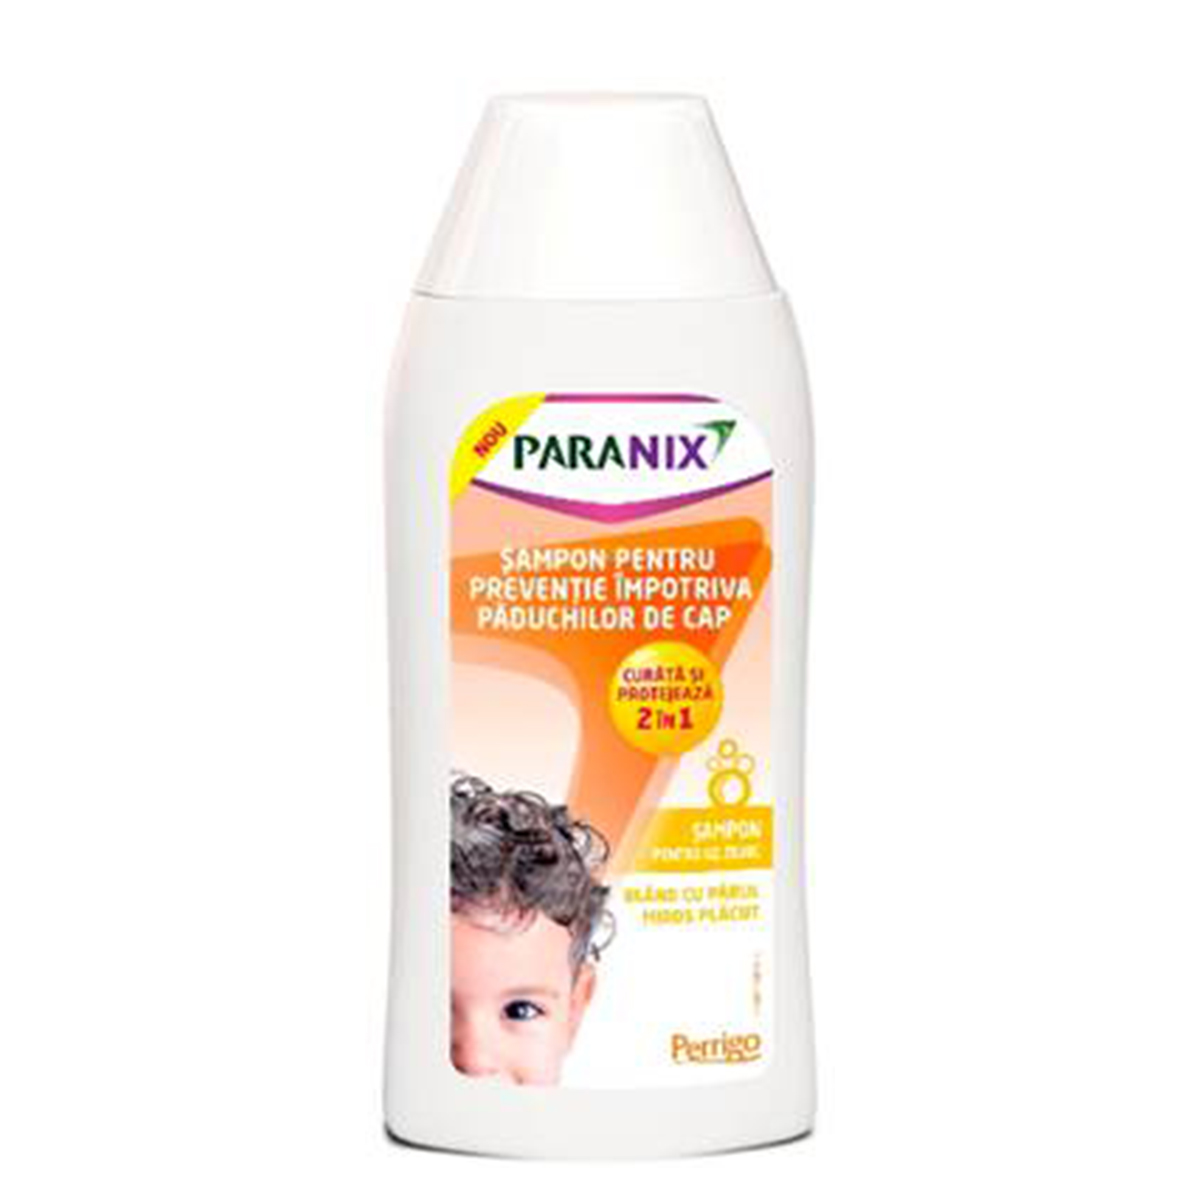 Sampon pentru preventie impotriva paduchilor de cap Paranix, 200 ml, Omega Pharma